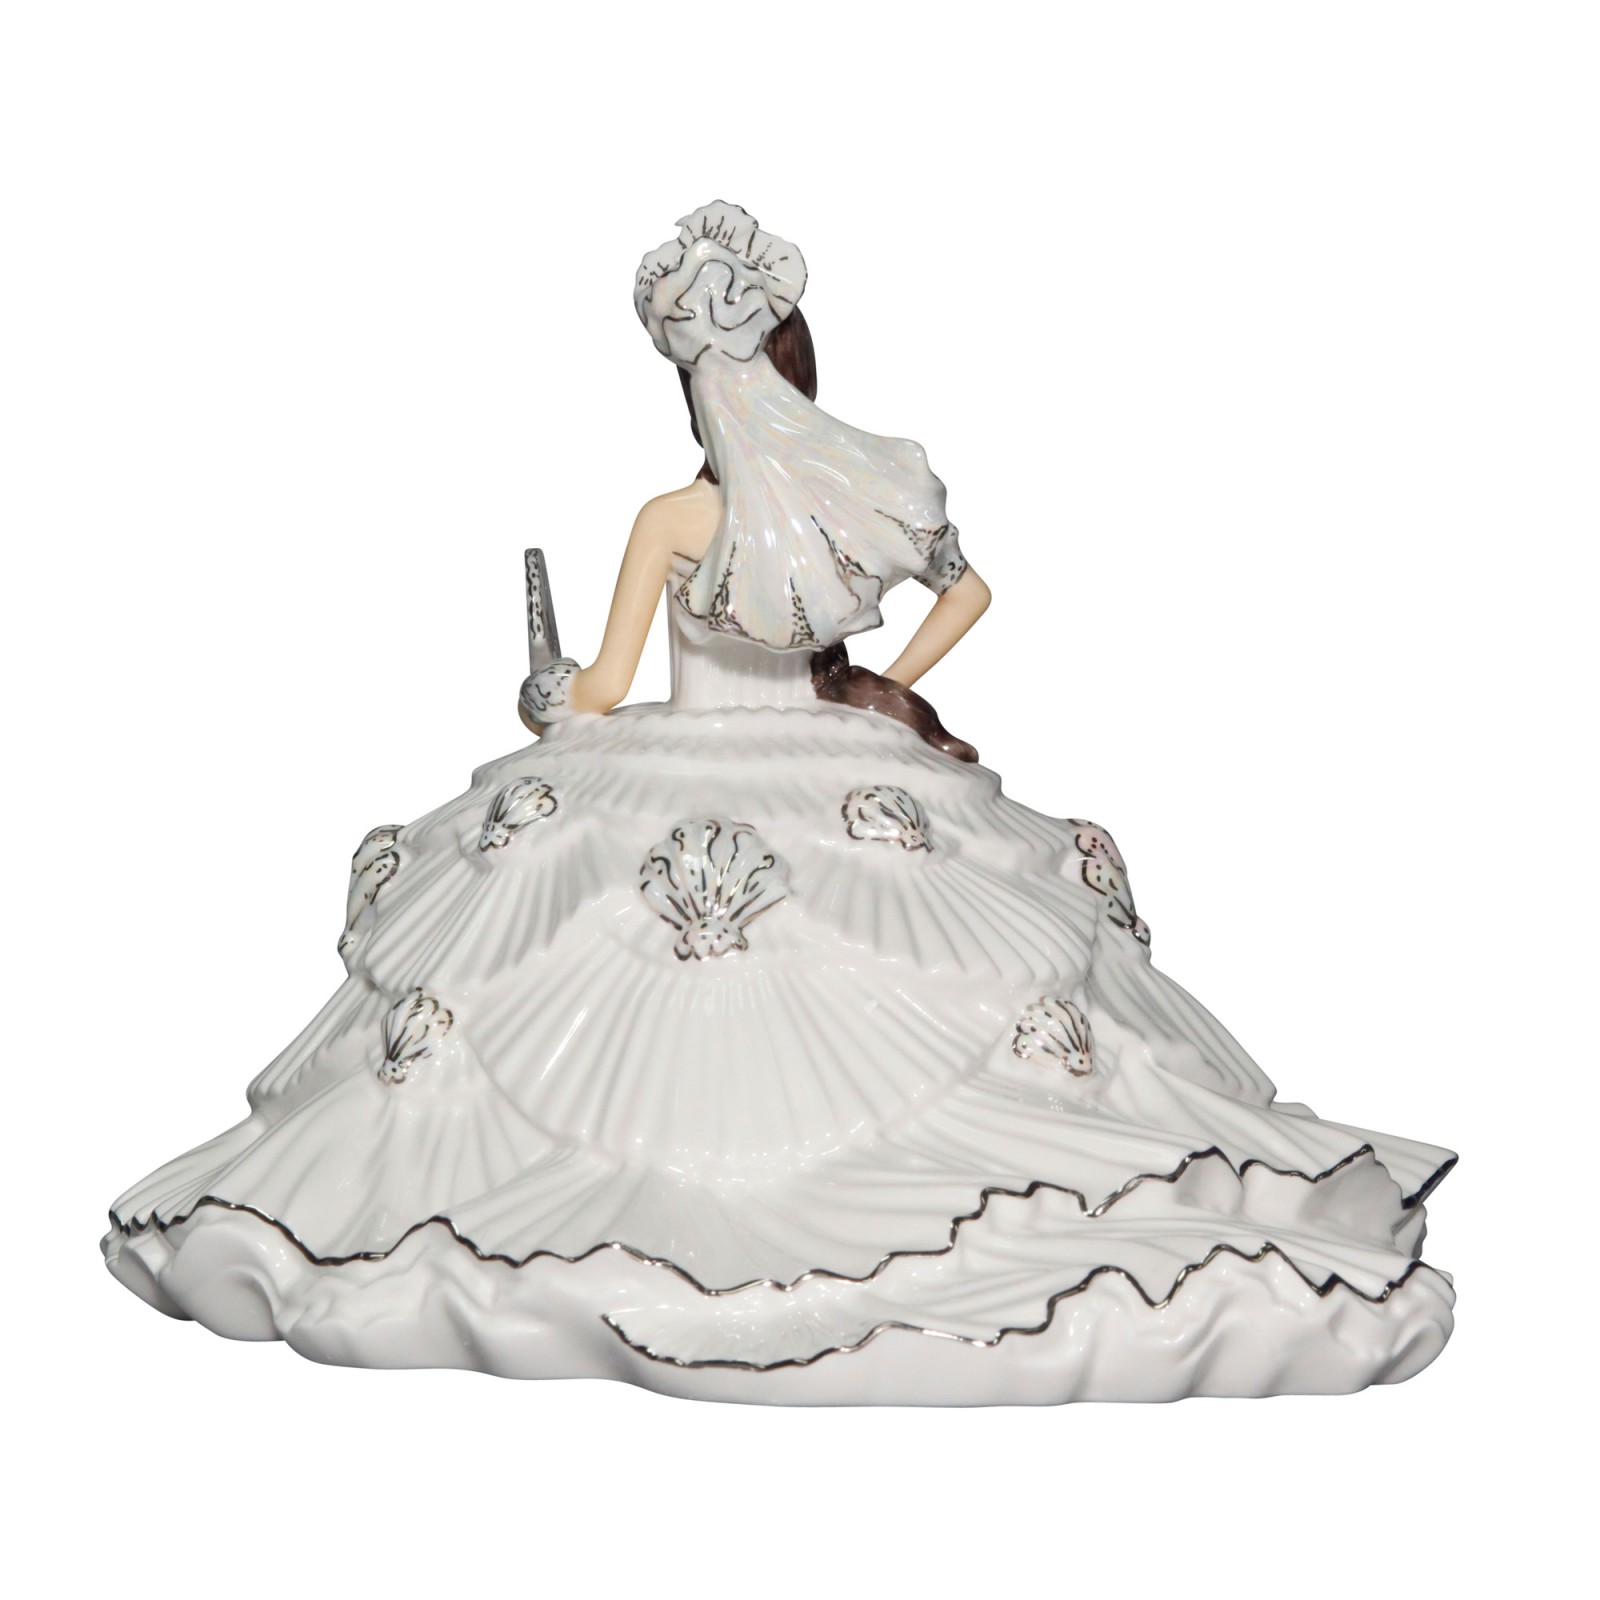 Gypsy Fantasy White Brunette - English Ladies Company Figurine